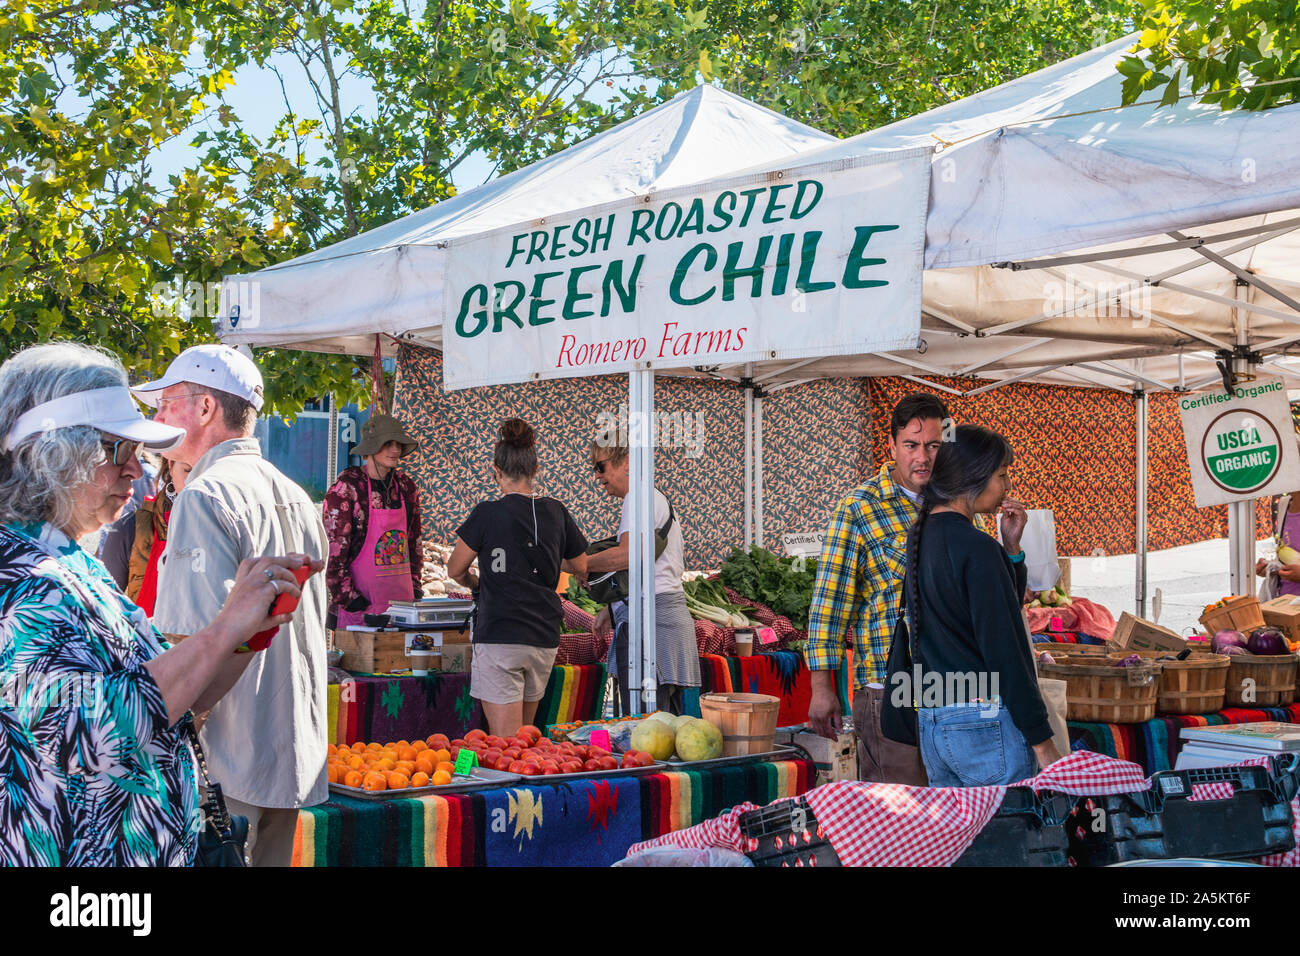 US Farmers Market selling fresh roasted green chile, Santa Fe, New Mexico Railyard Farmers Market. Stock Photo